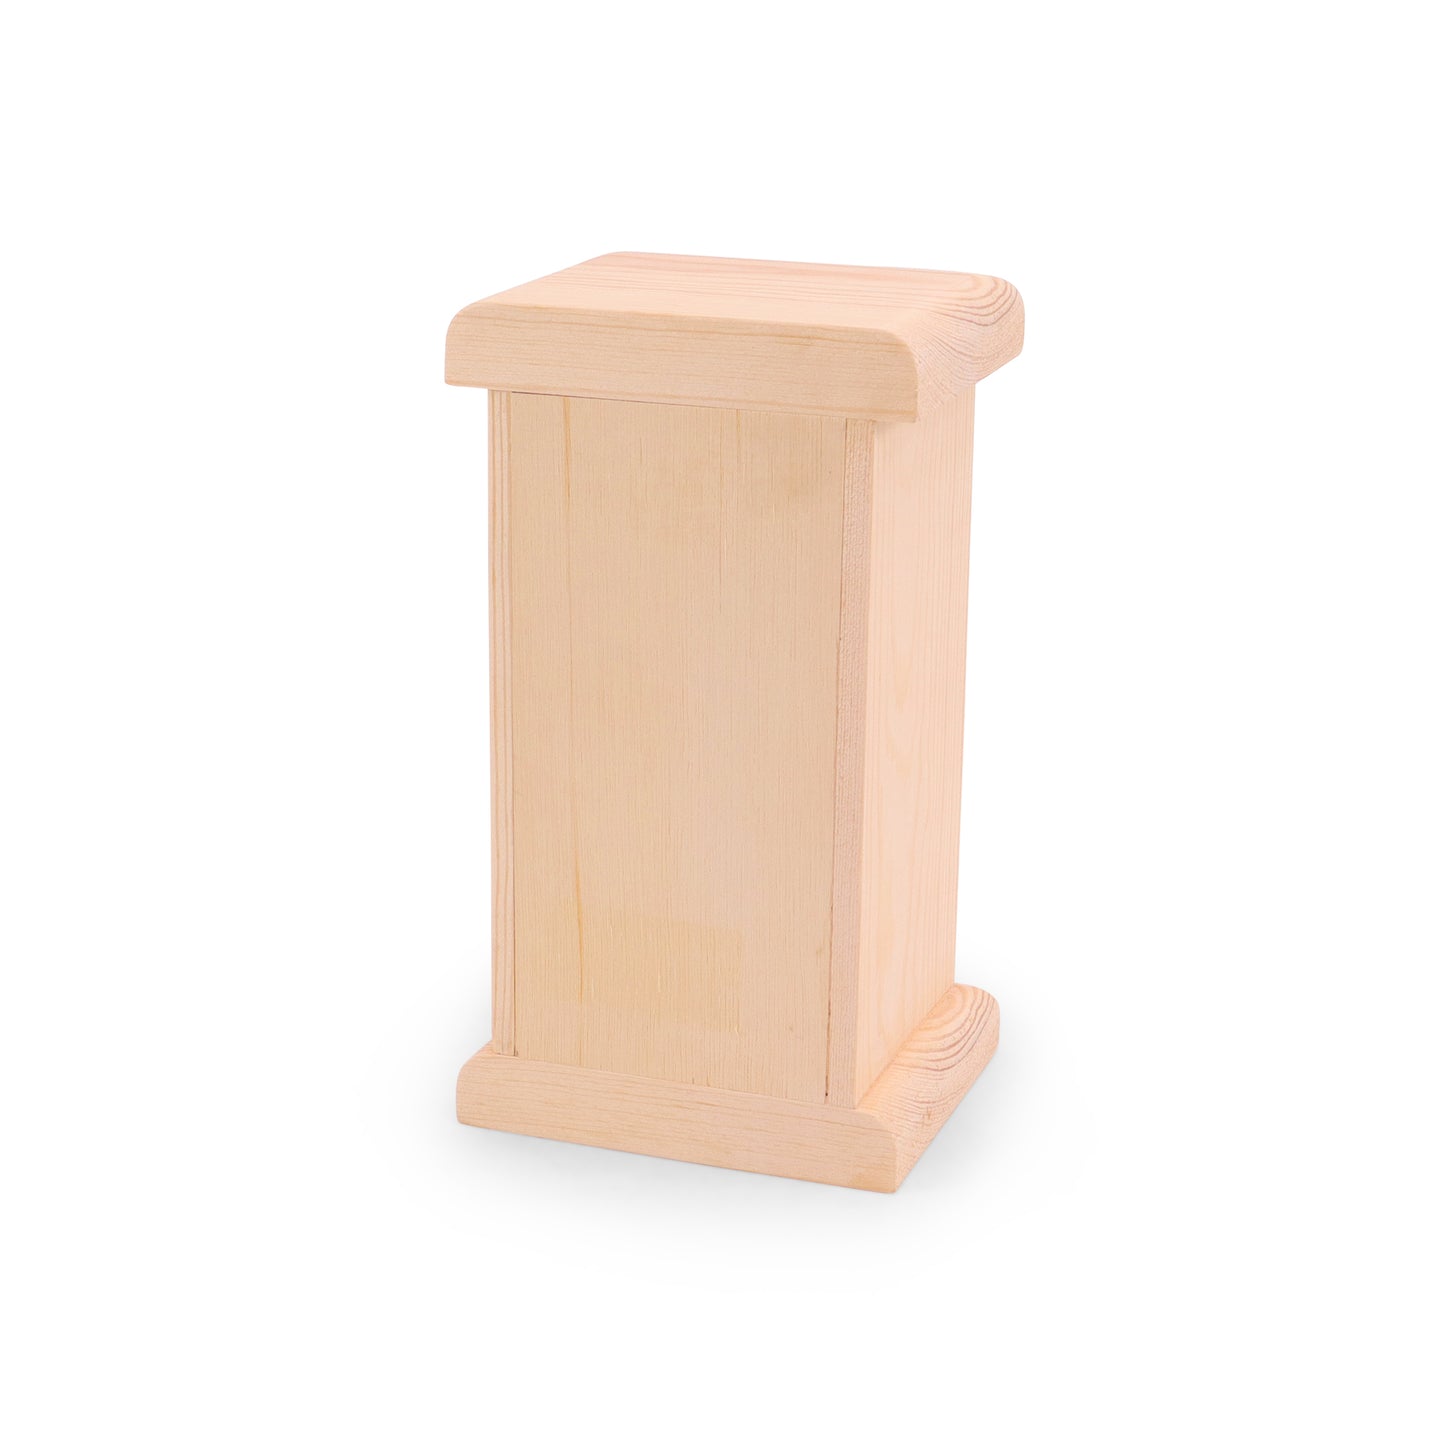 4"x4.5"x8" 2 Drawer Wooden Spice Box. Pattern: A19B